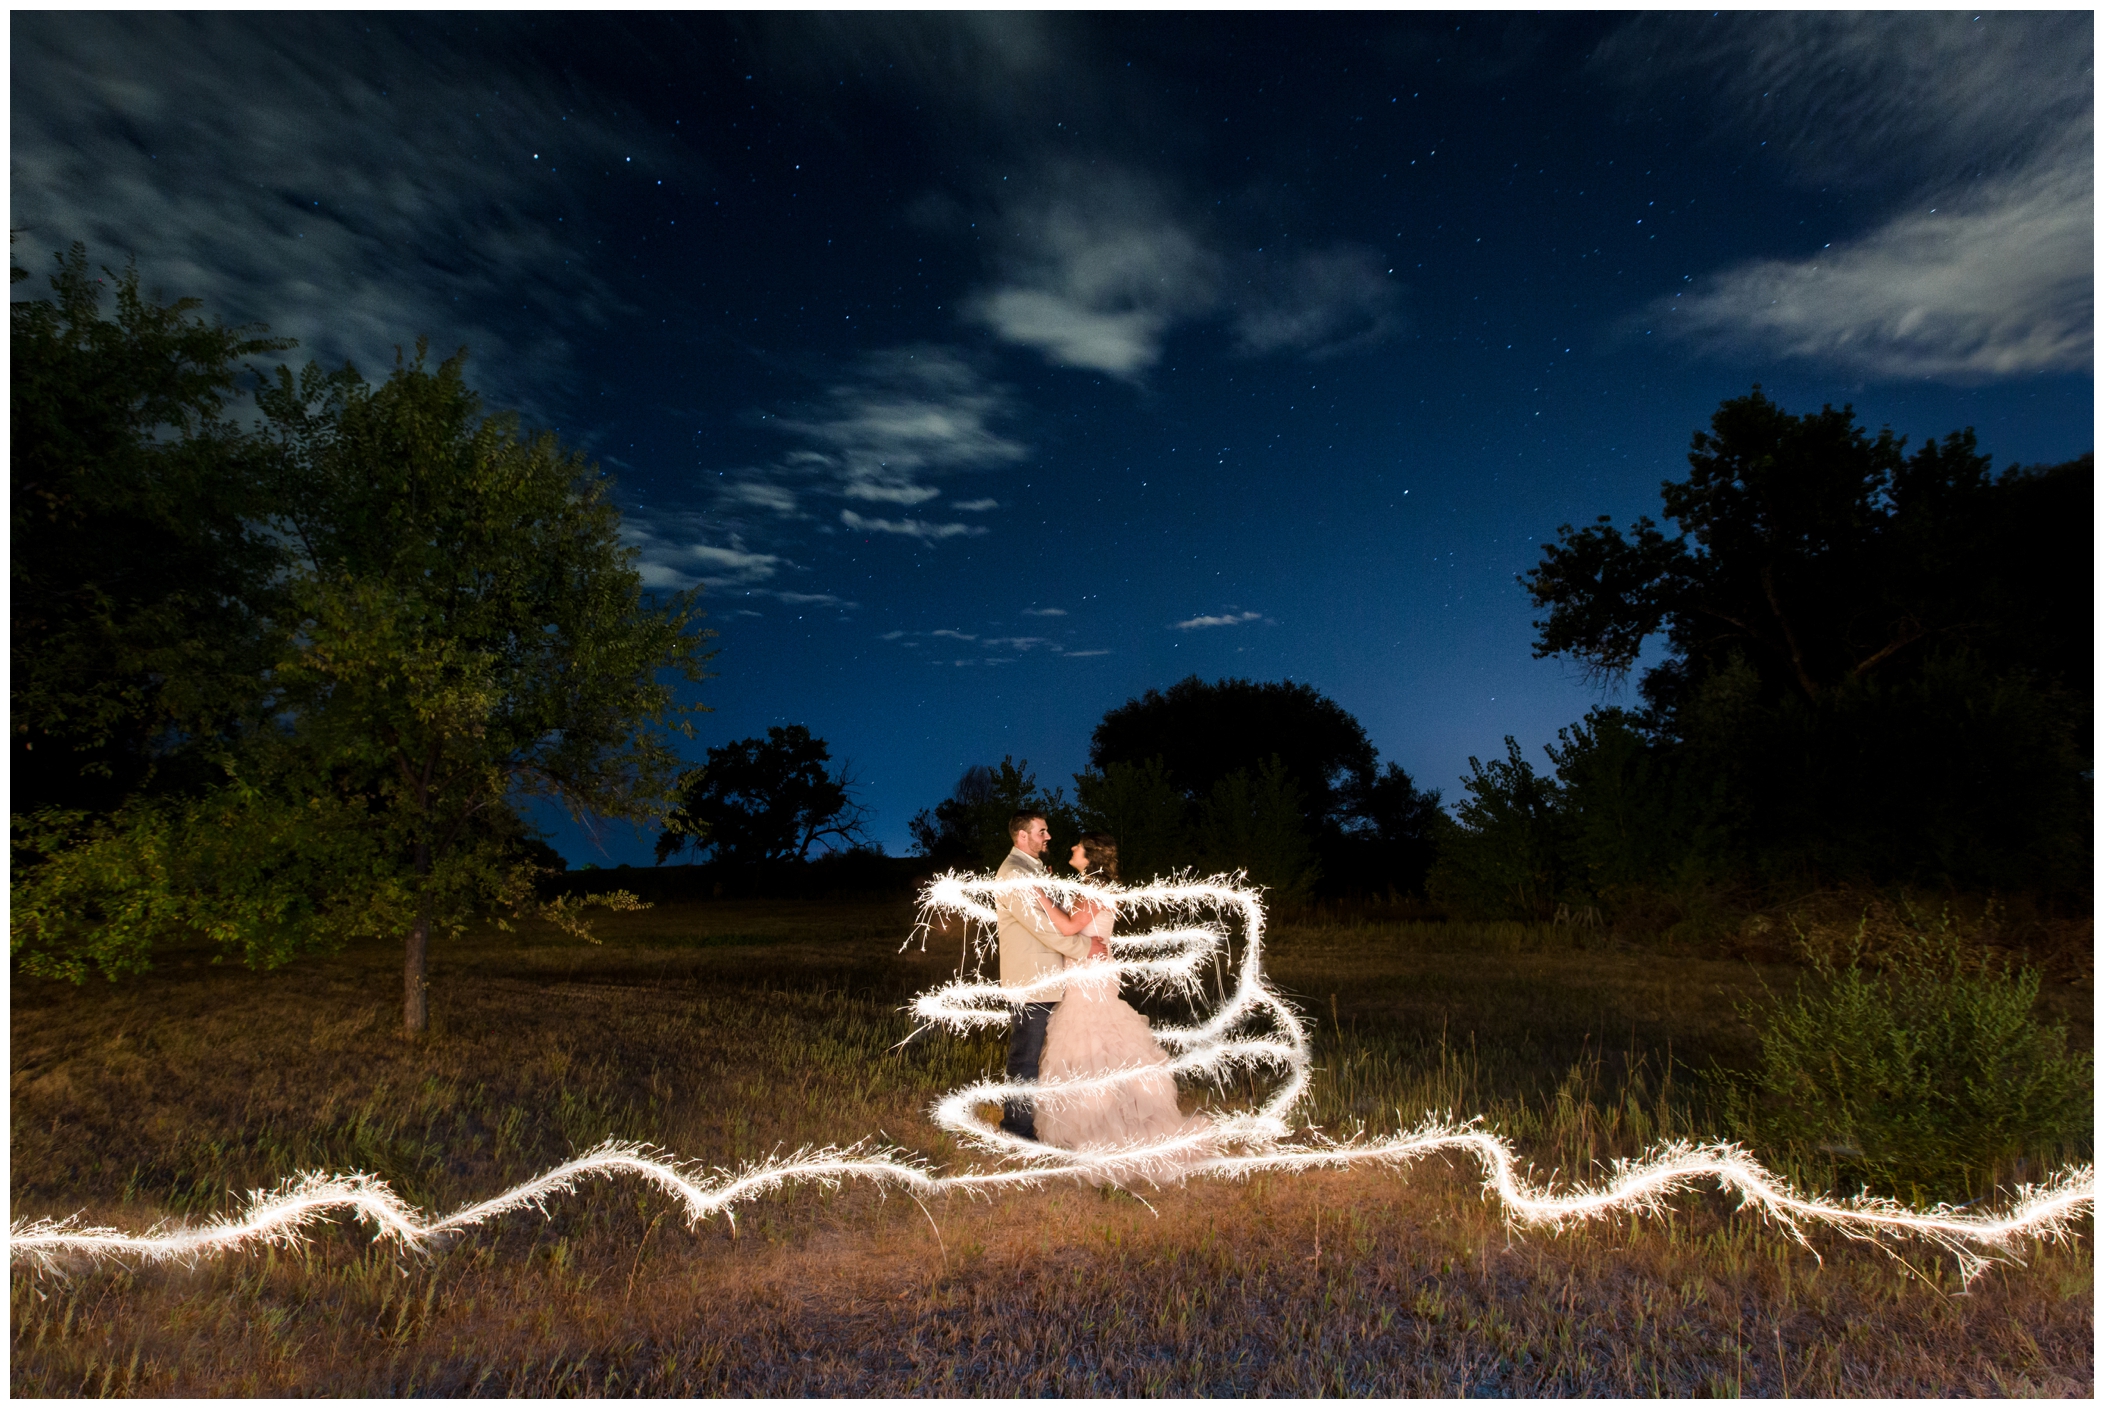 epic wedding sparkler photos by award-winning Colorado wedding photographer Plum Pretty Photography 